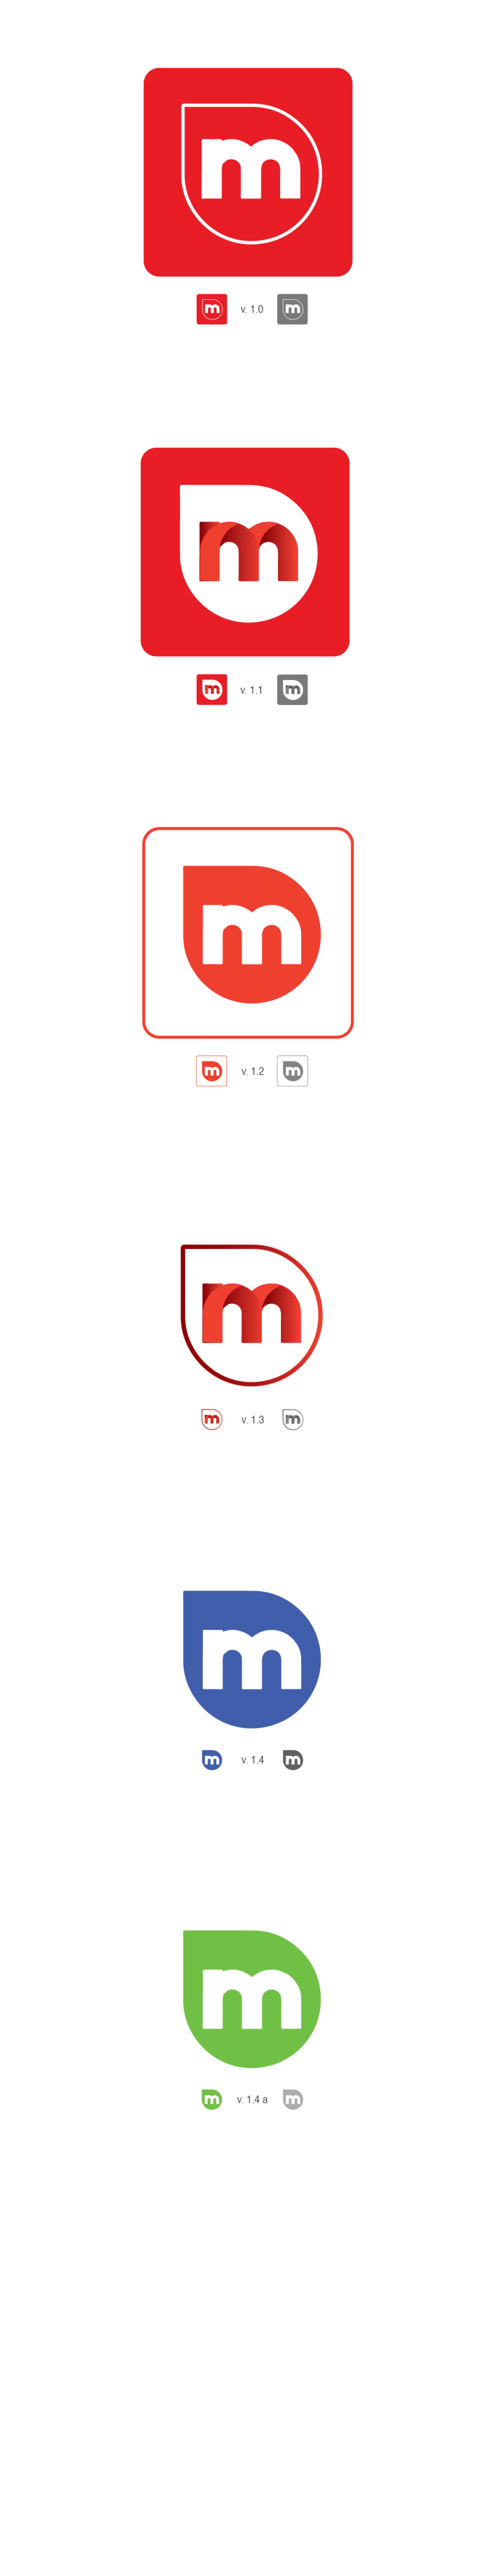 logo/icon - byumobiles  [versions] -1